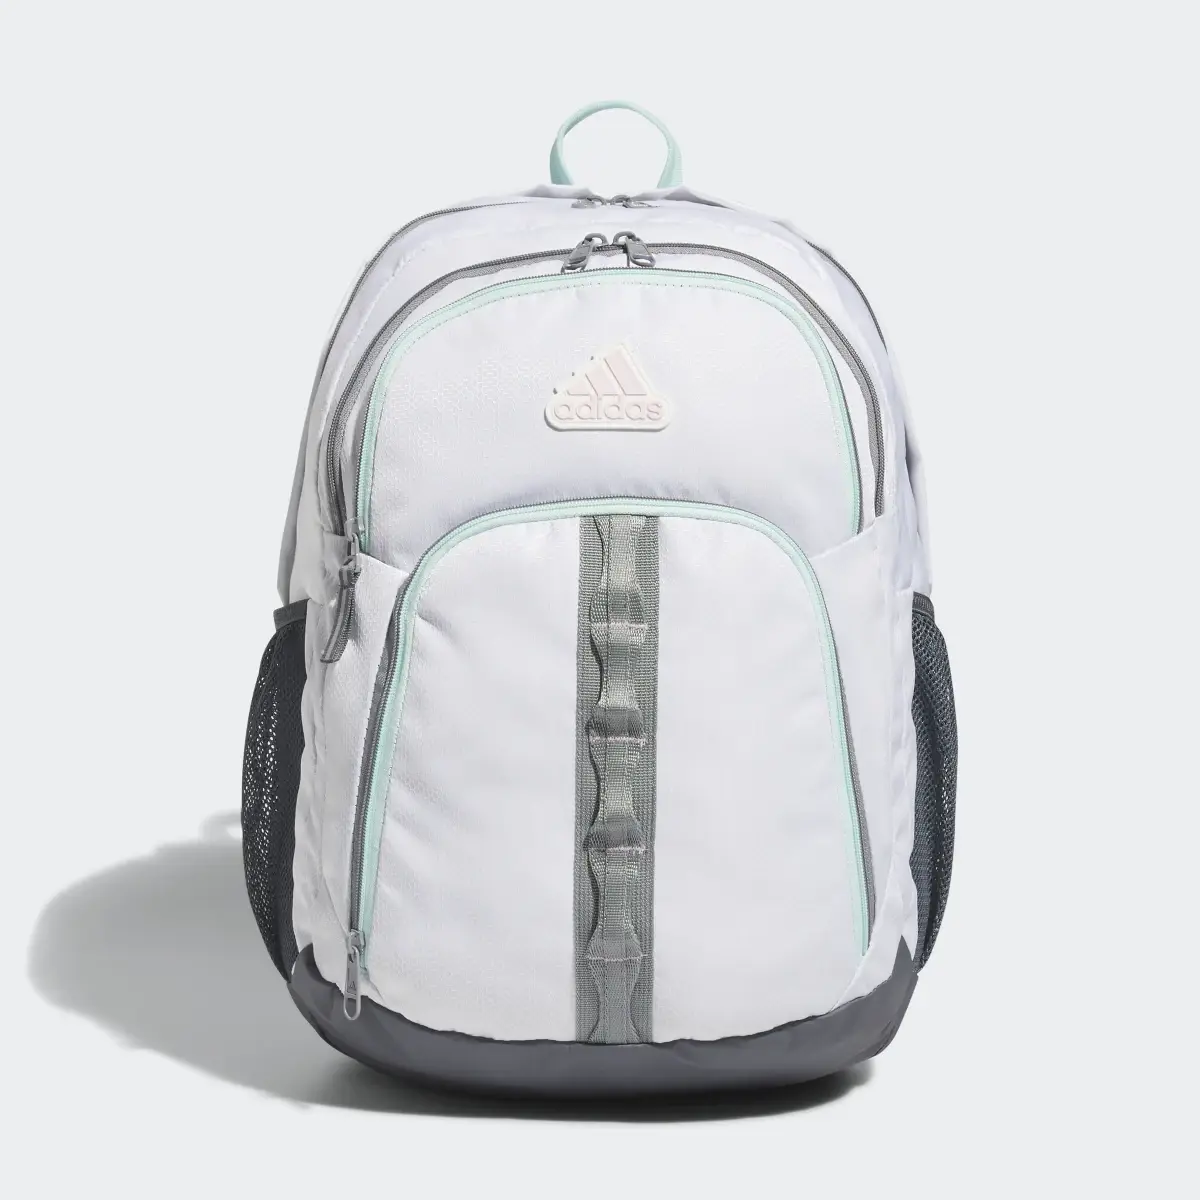 Adidas Prime Backpack. 2